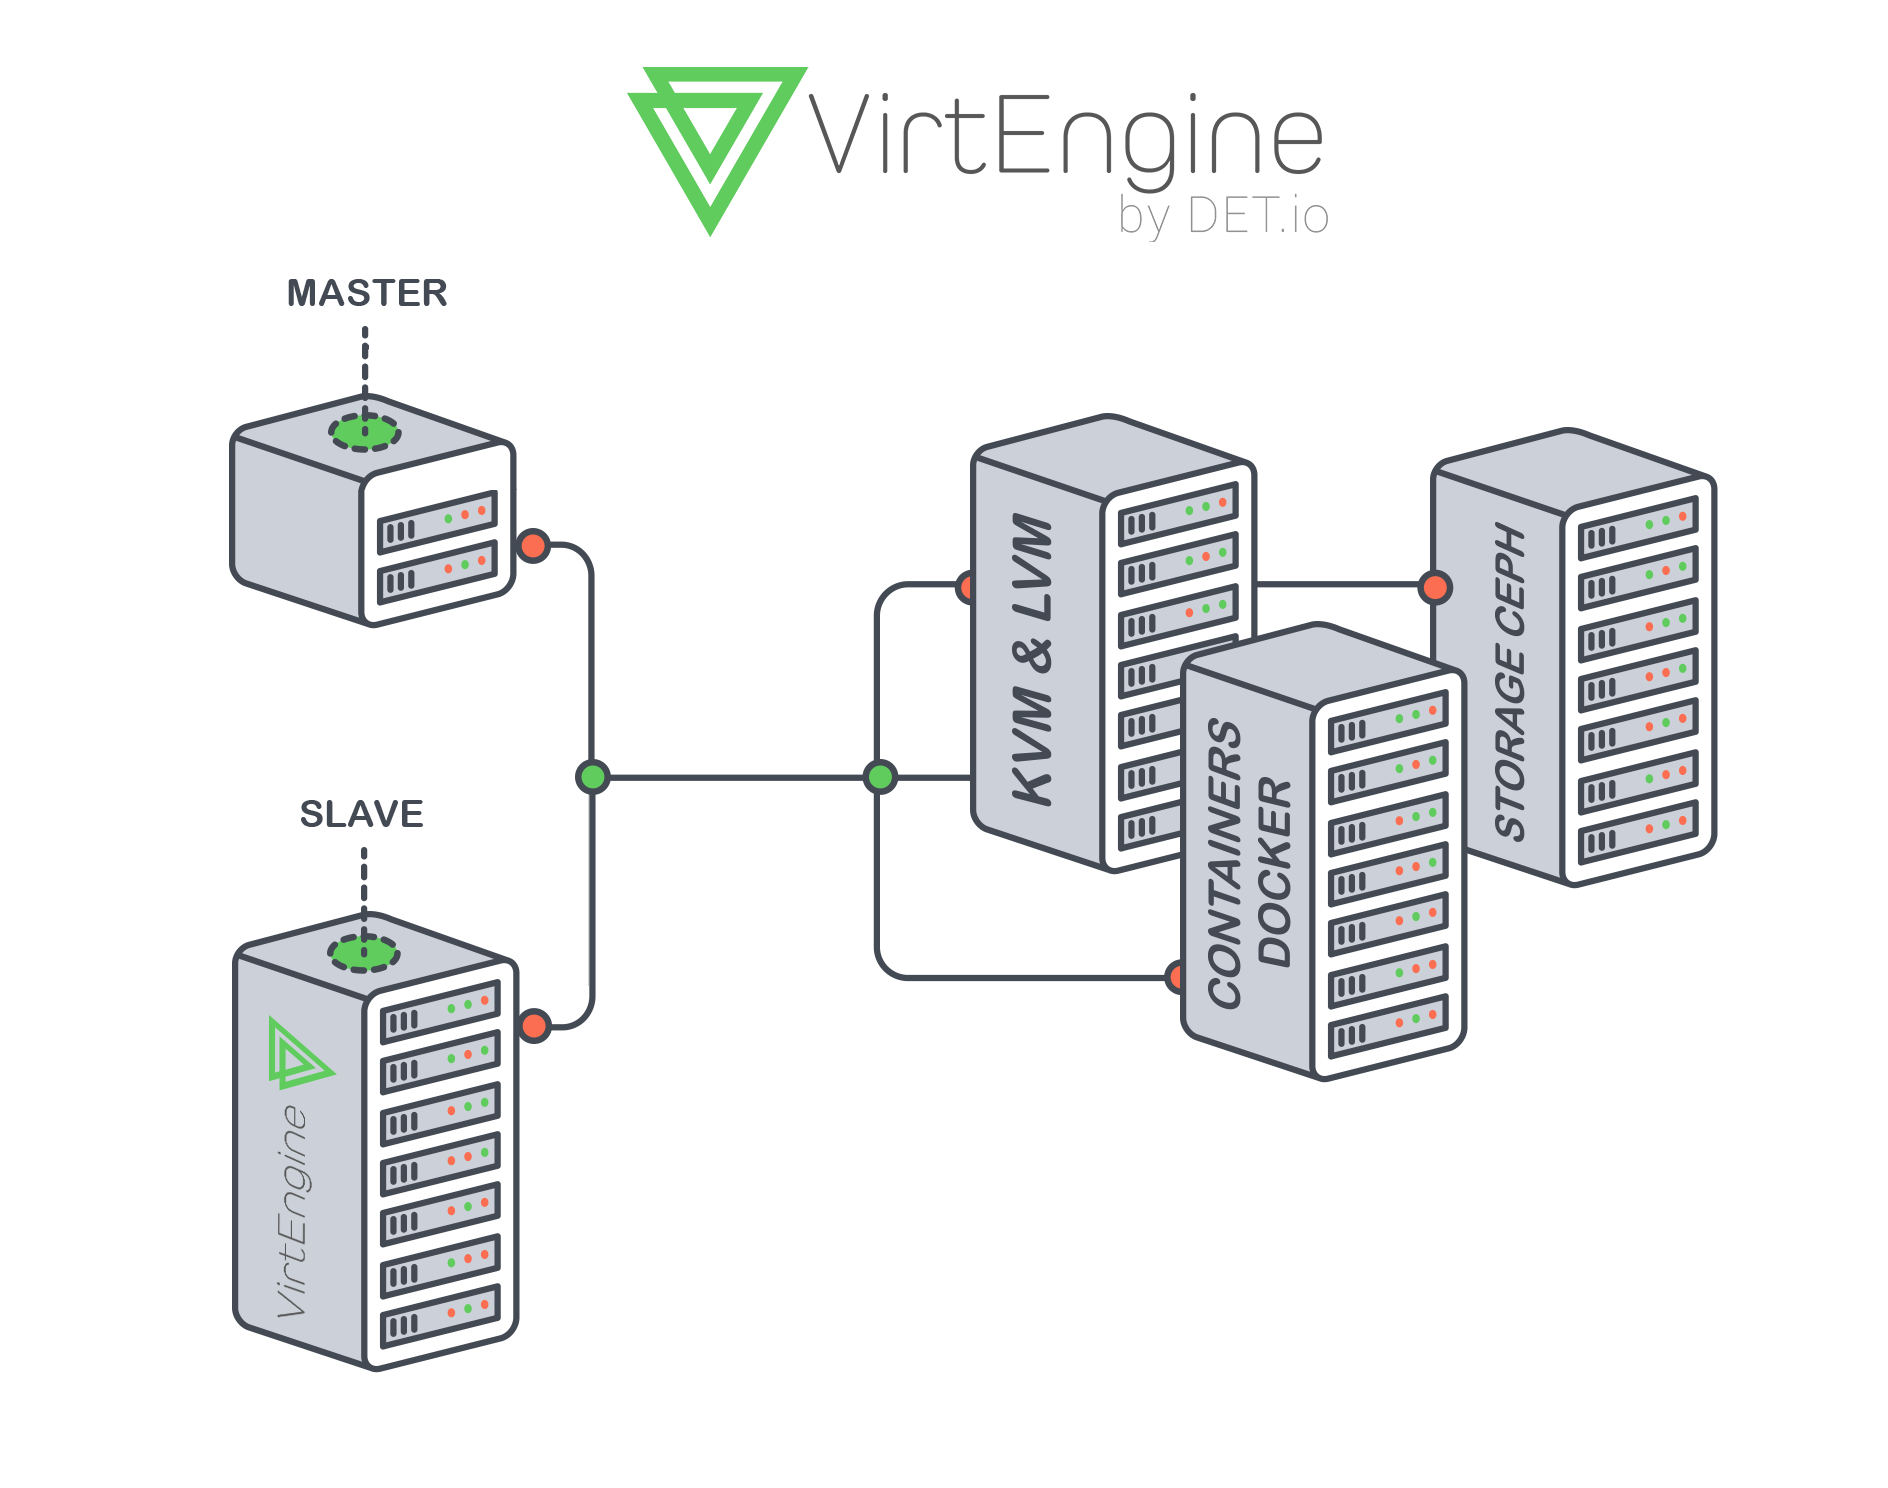 System Architecture for VirtEngine